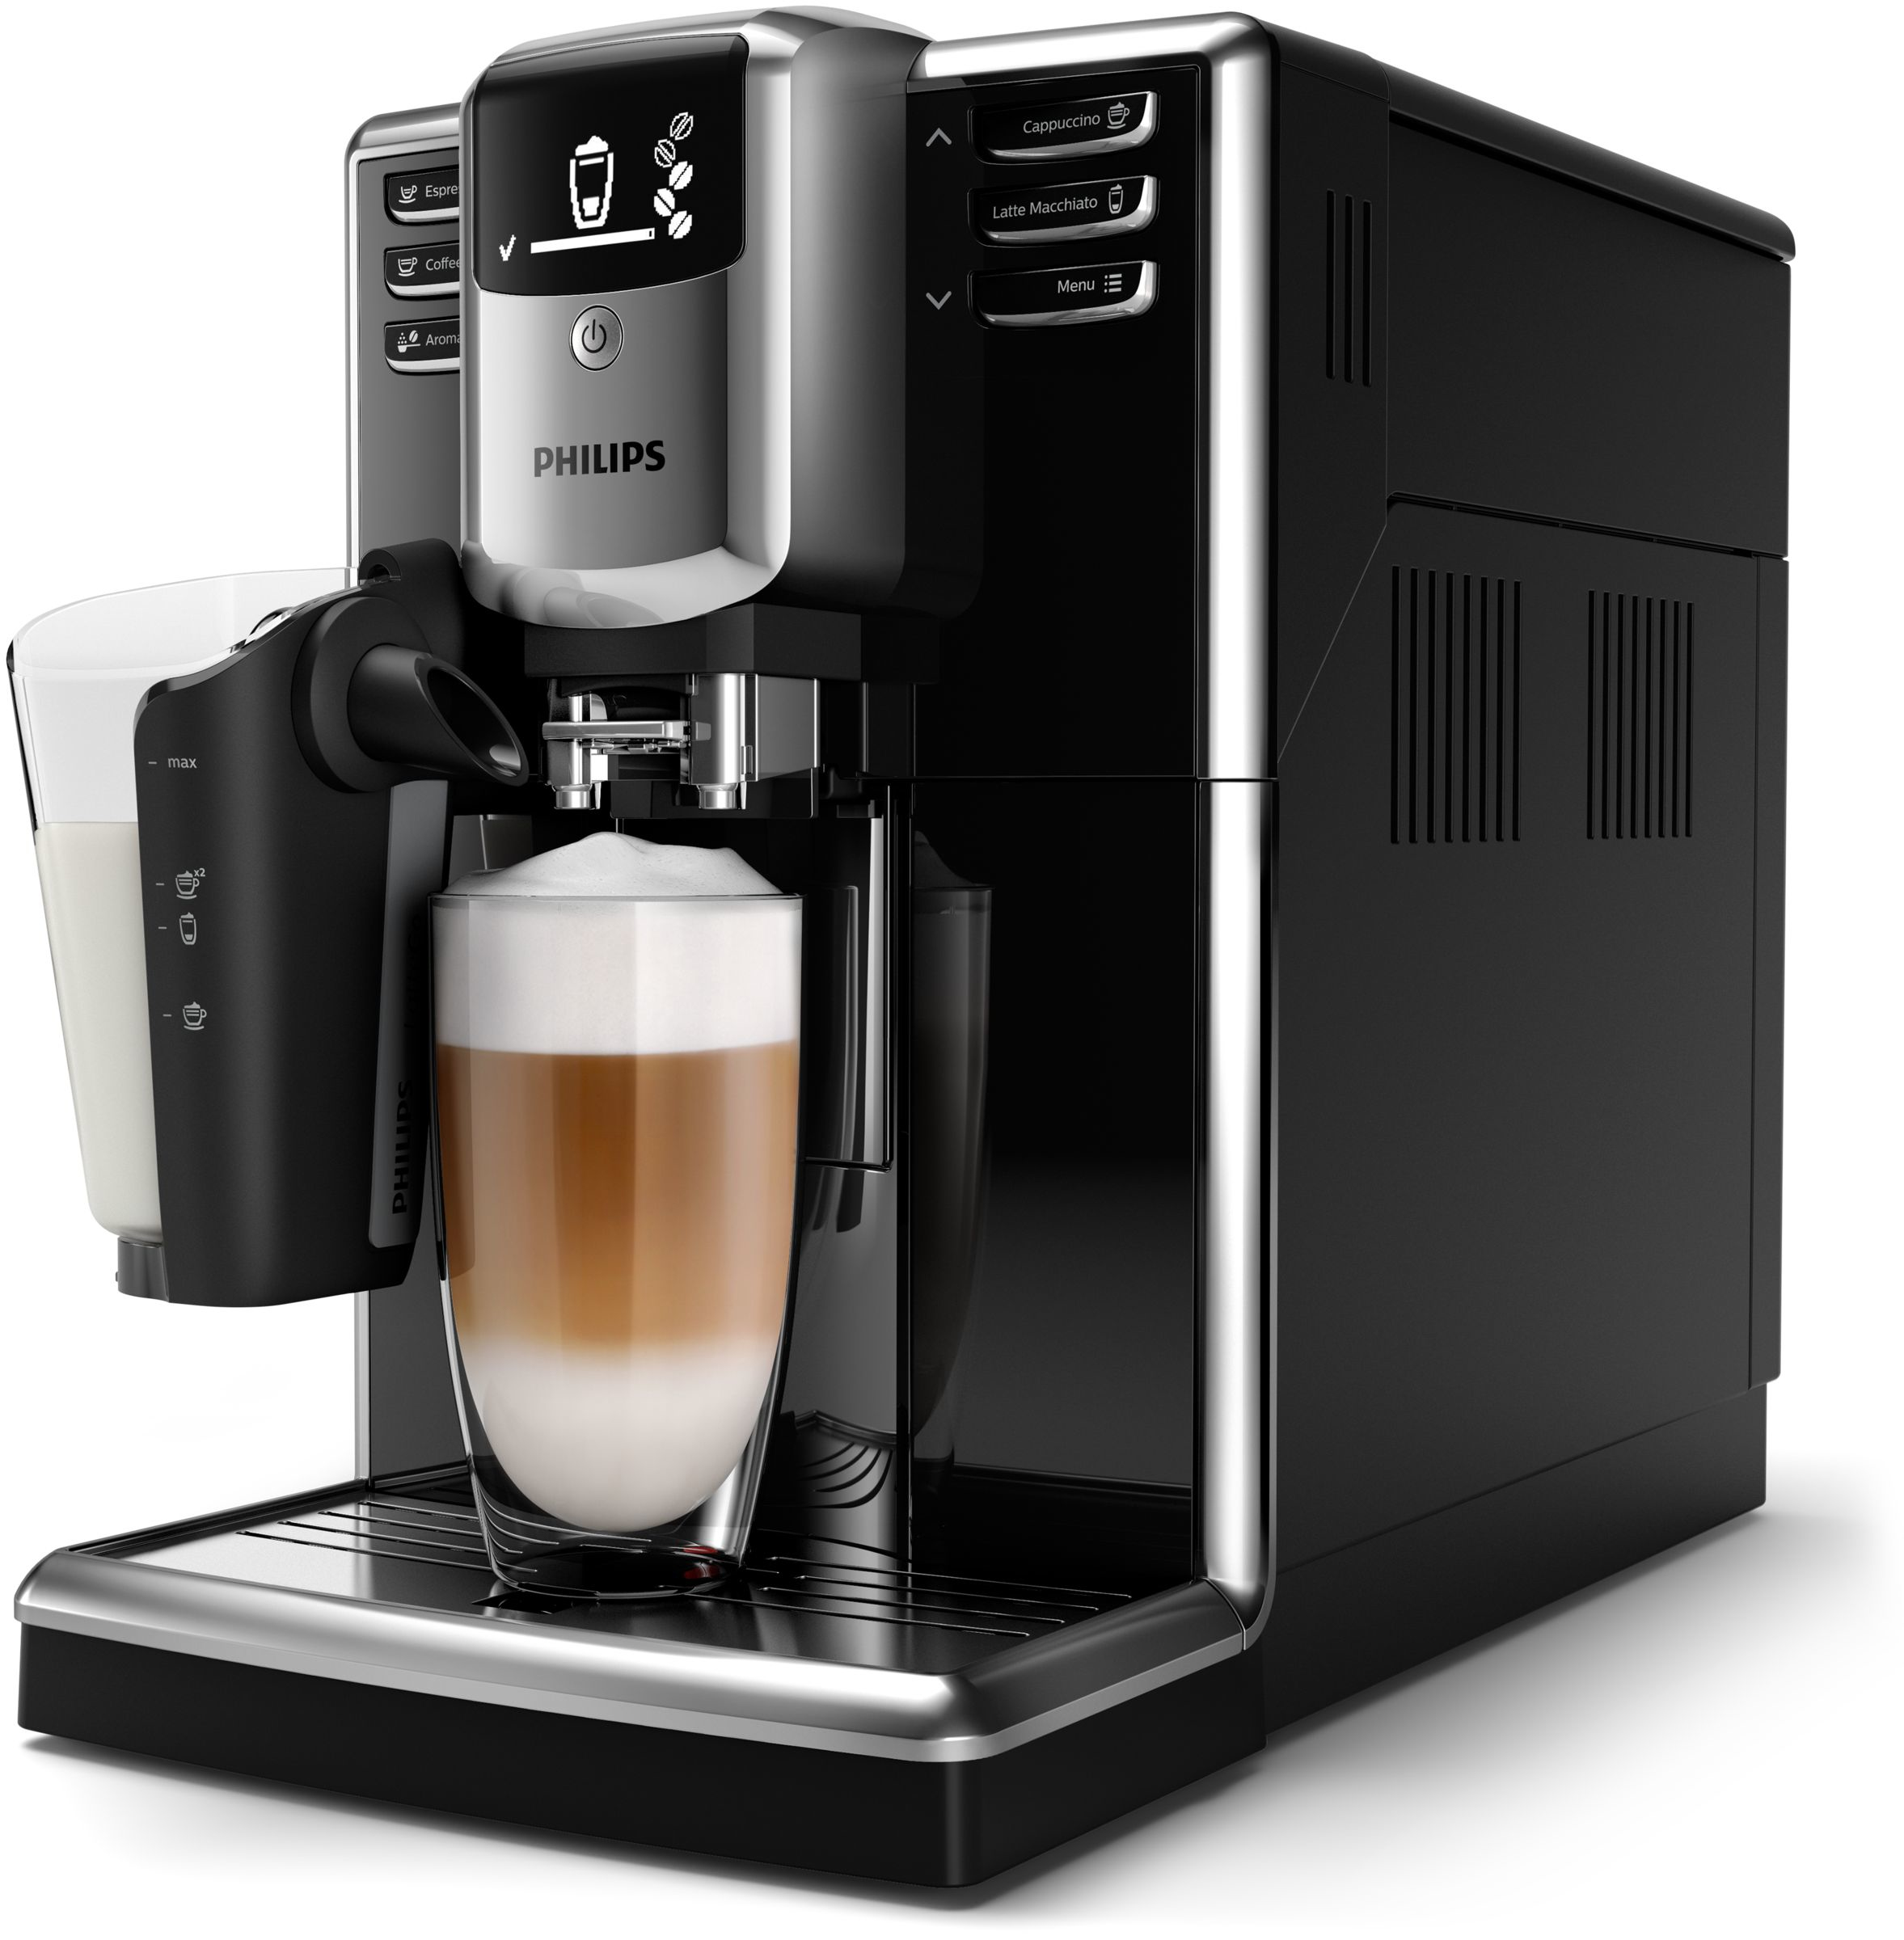 Philips 5000 series EP5330/10R1 coffee maker